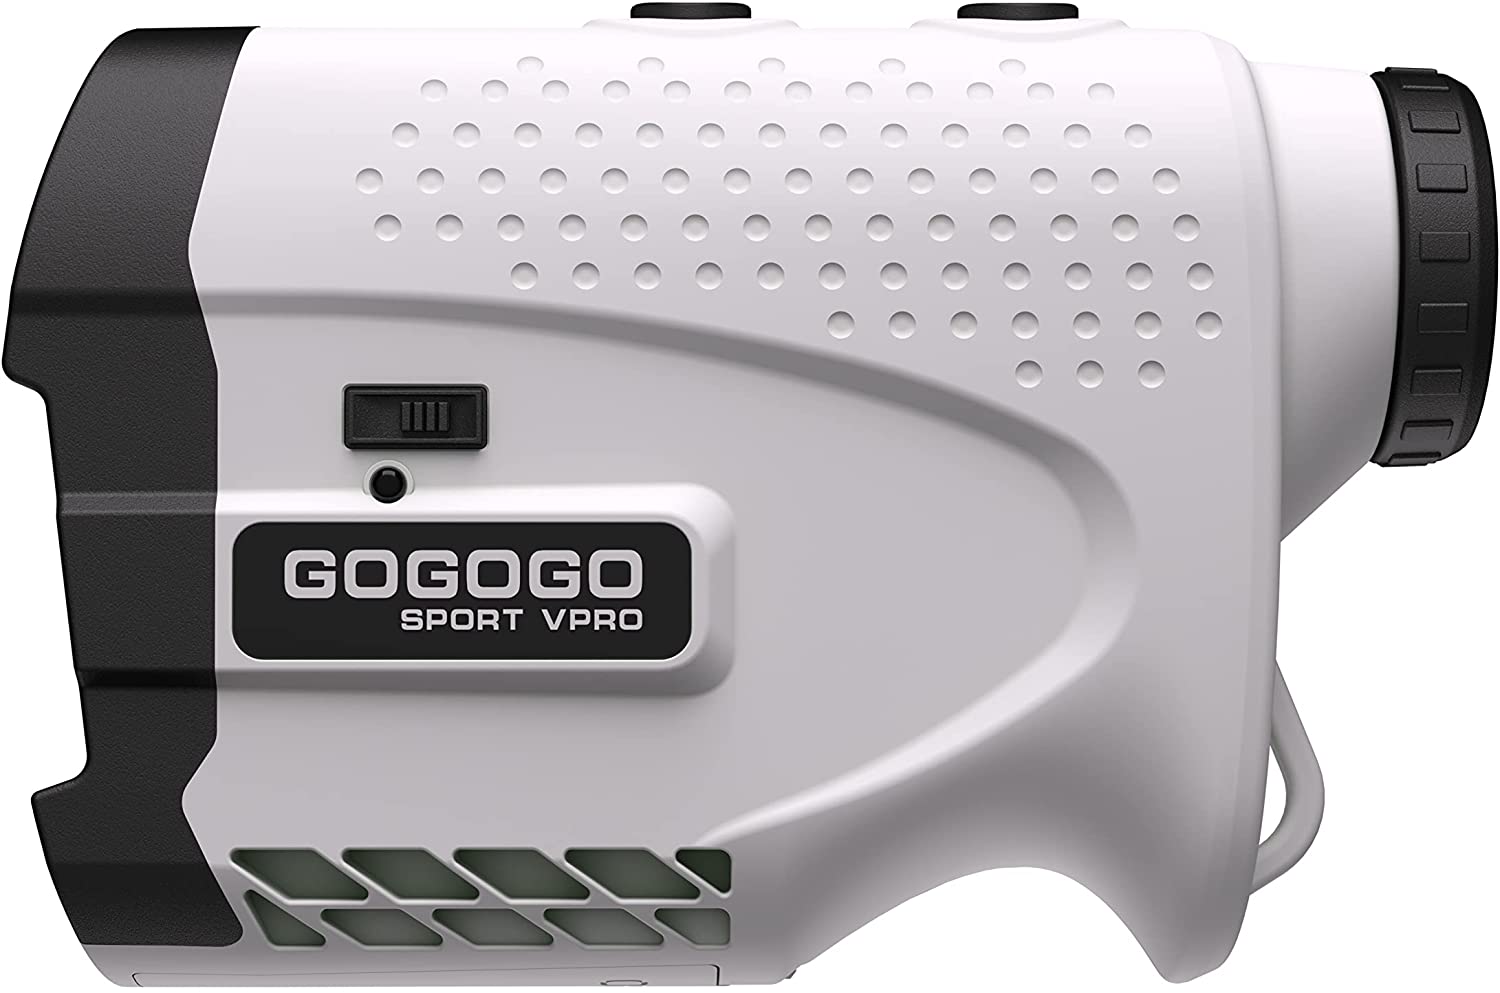 Gogogo Sport Vpro GS24 Review